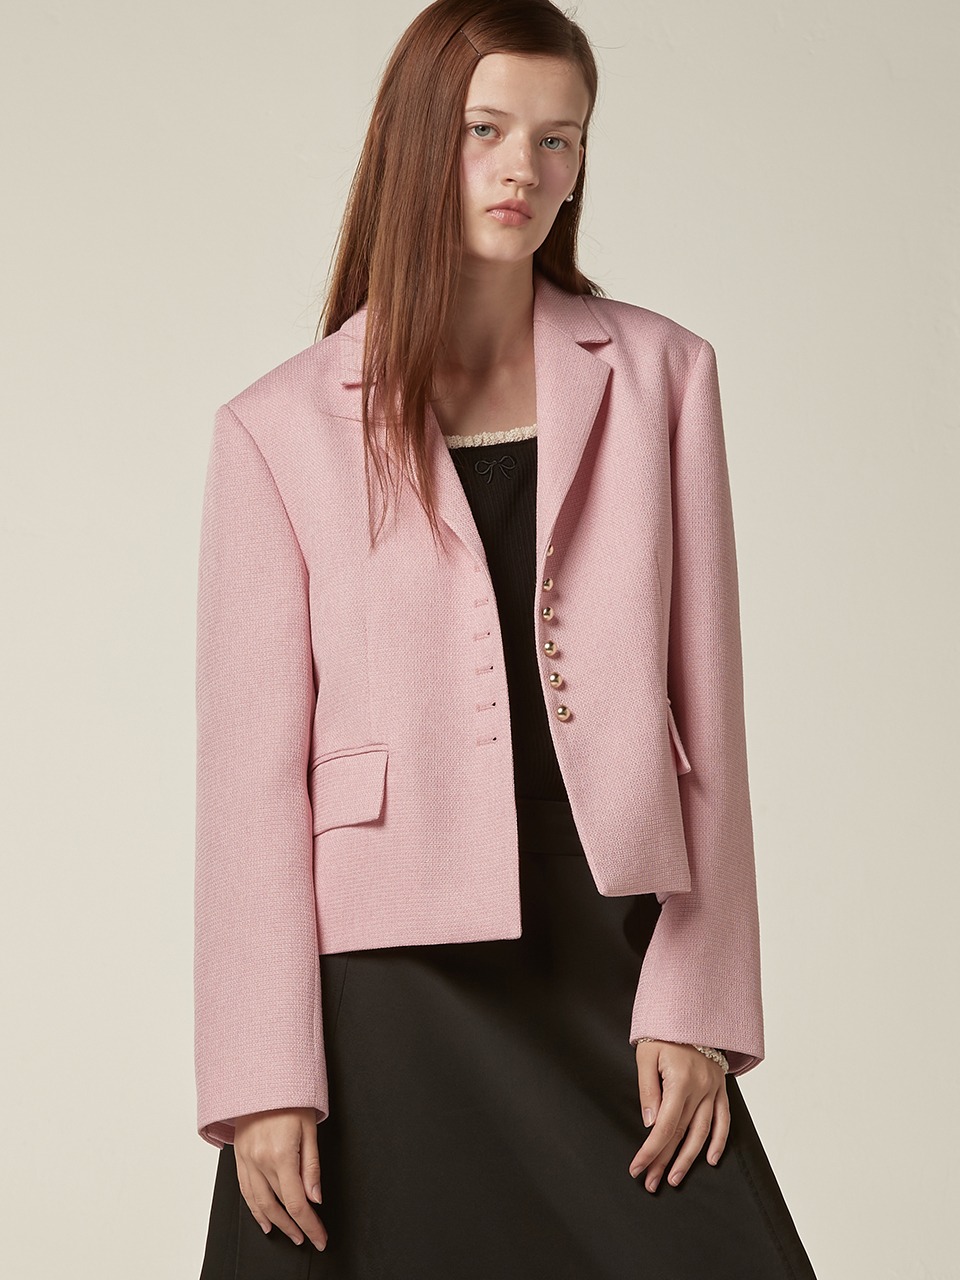 [REFURB SALE] Gold button tweed jacket - Soft pink